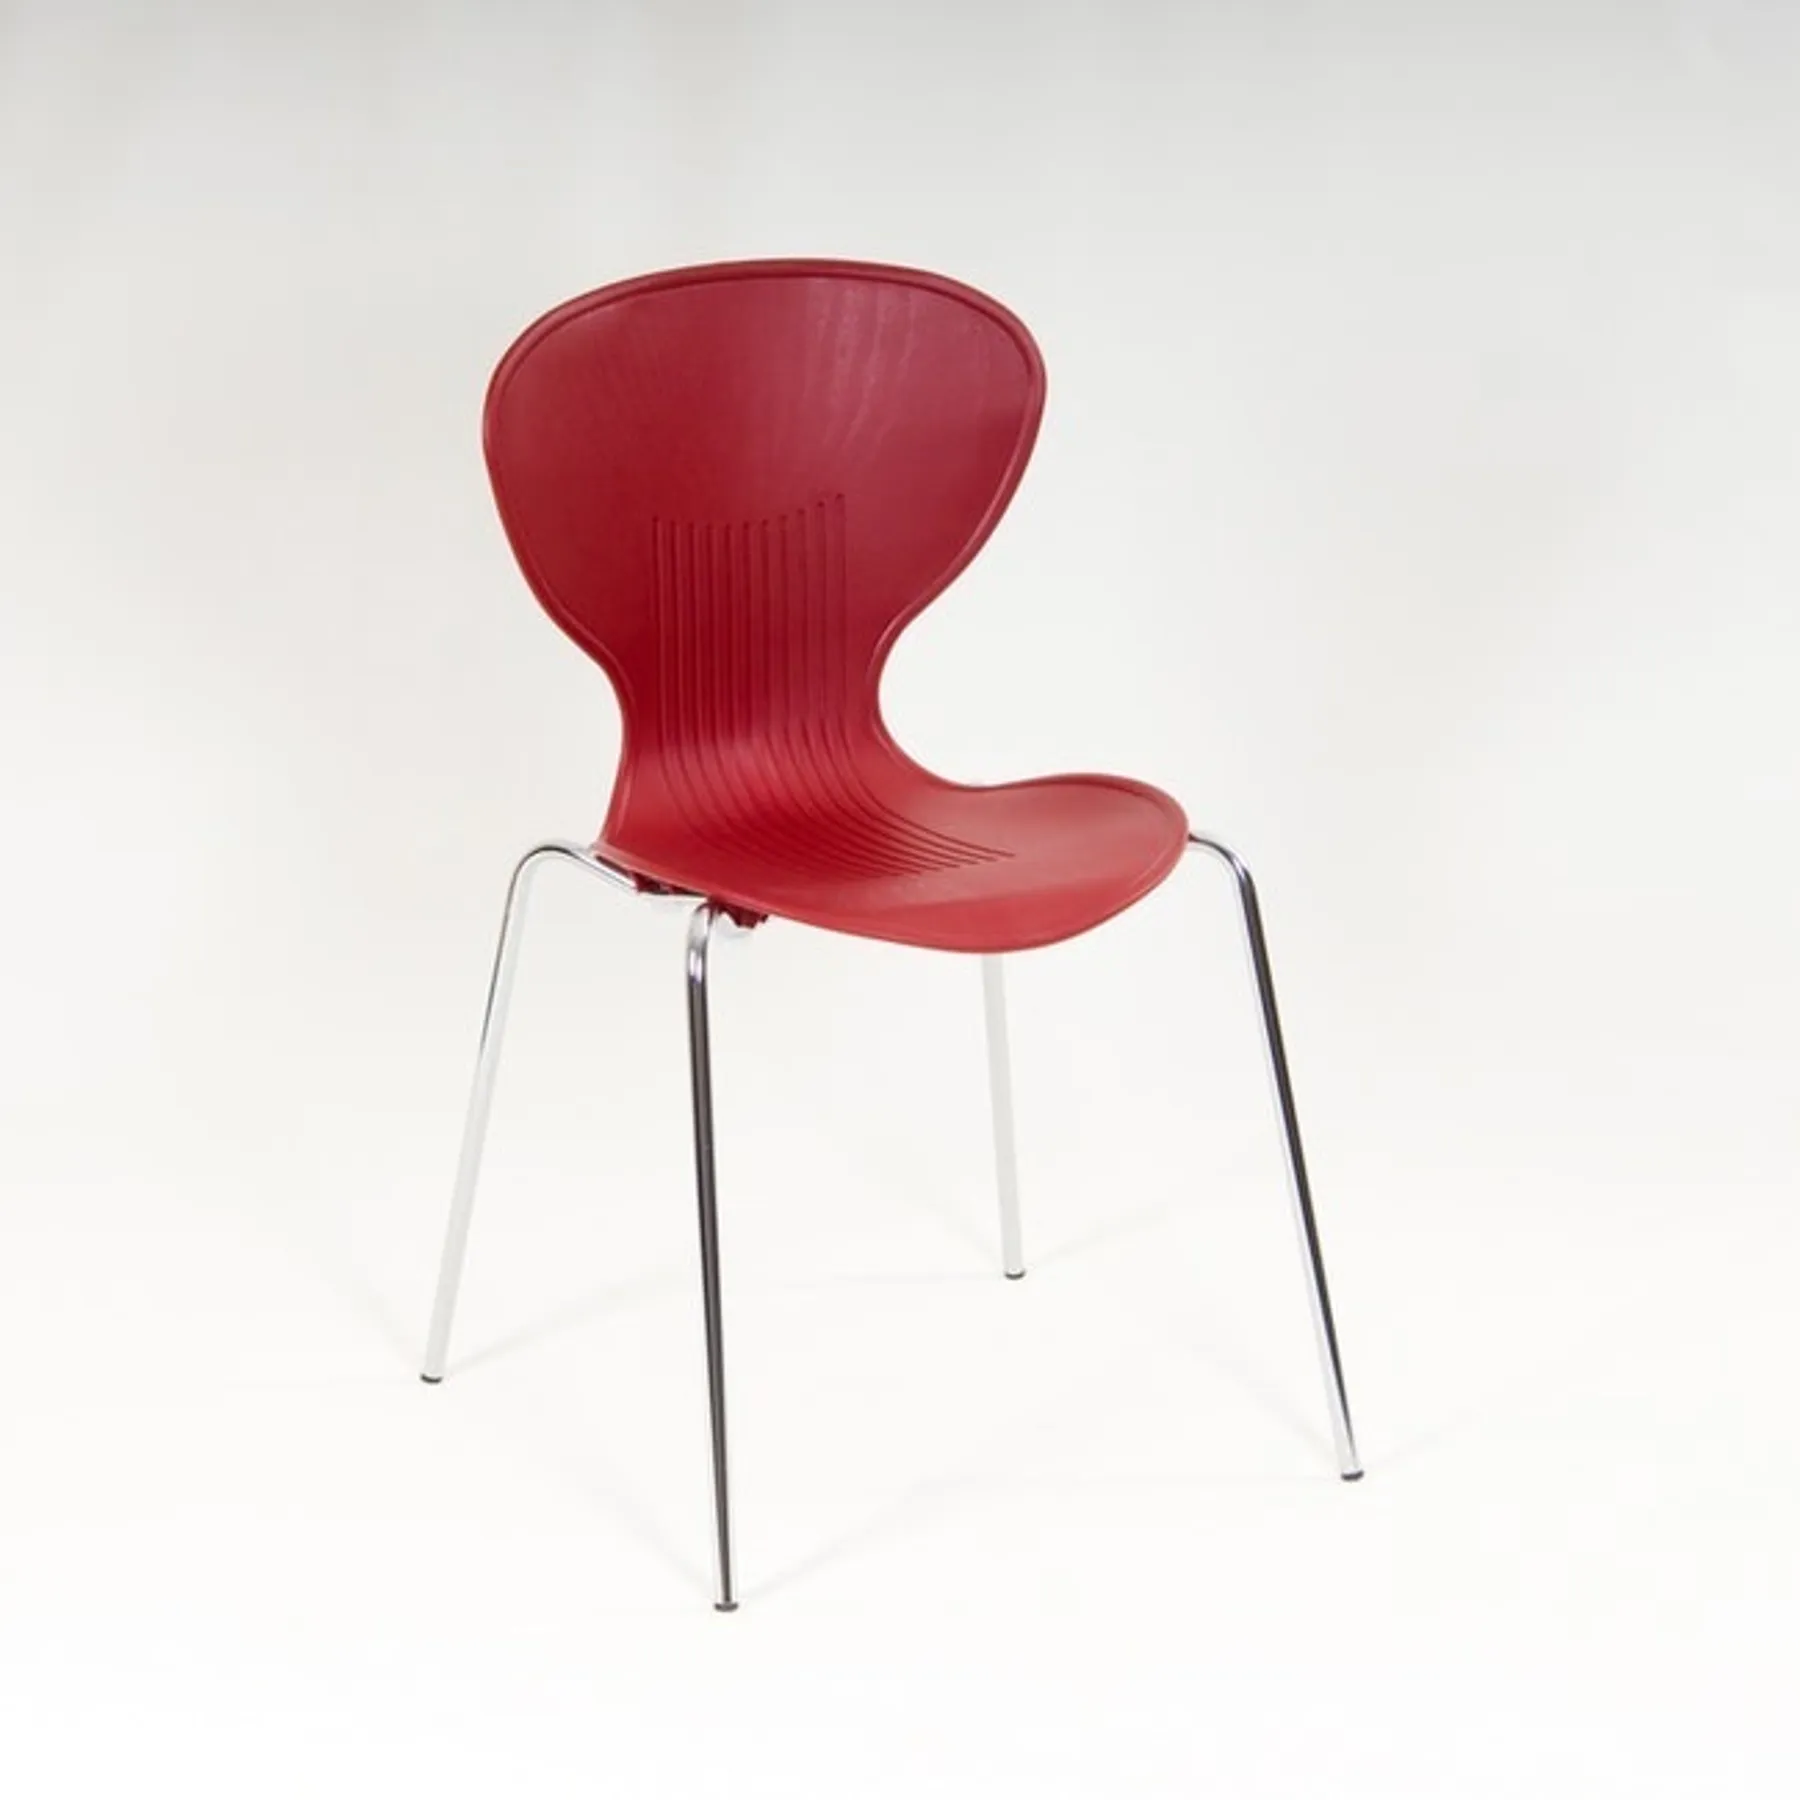 Lof direct Sven Christiansen XRC1 Plastic Cafe Chair Red